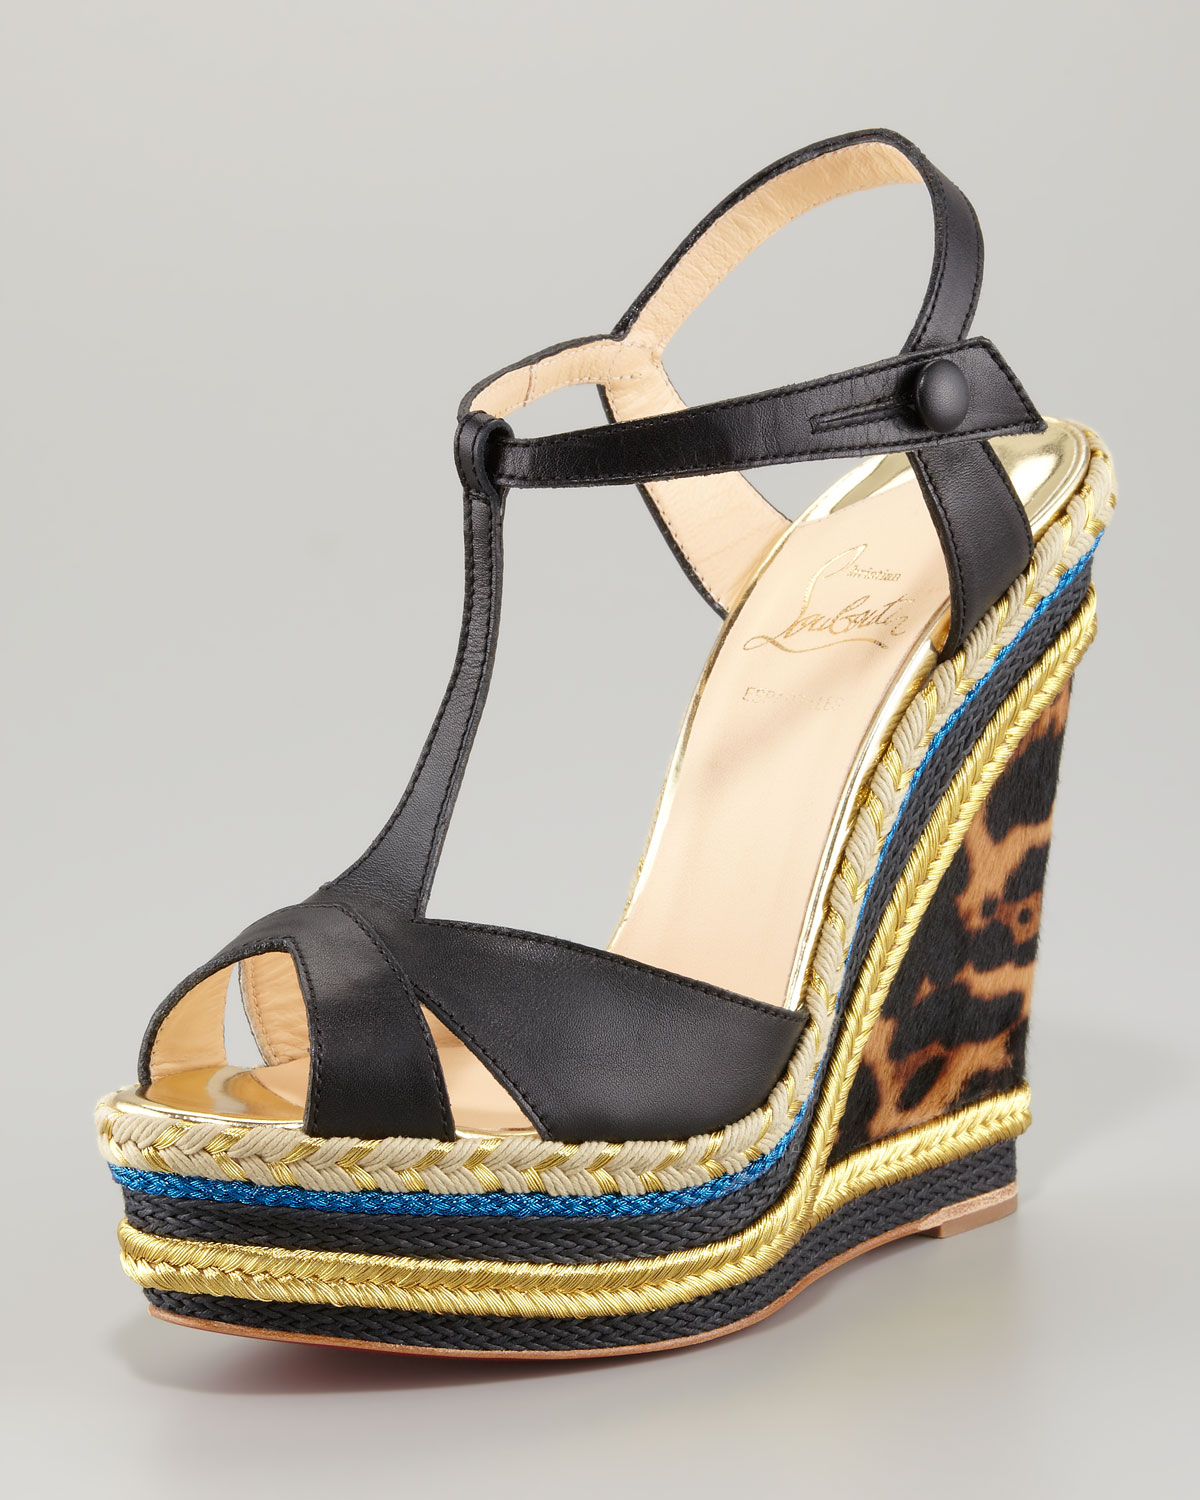 christian louboutin mens shoes - Christian louboutin Zeppa Colorblock Wedge Sandal in Black (multi ...